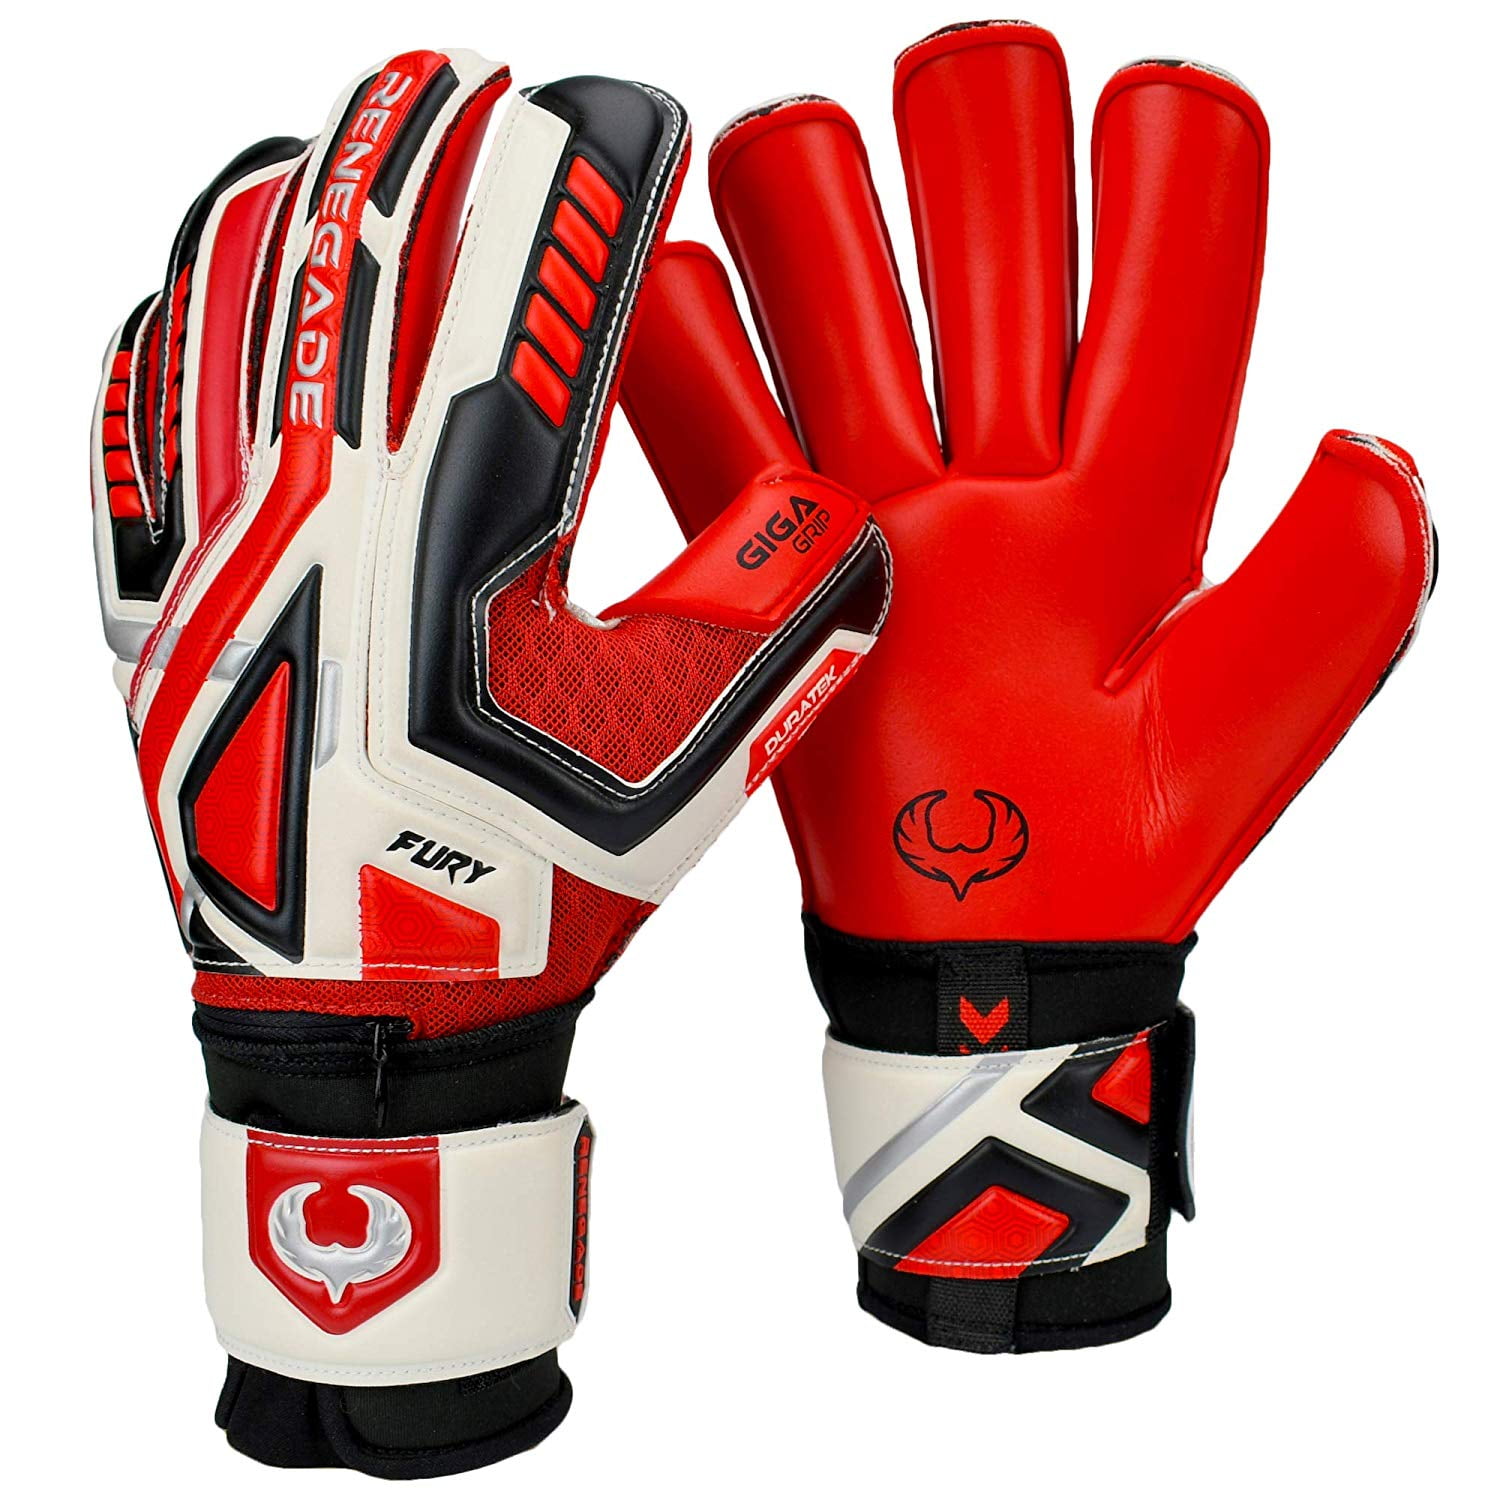 fingersave goalkeeper gloves size 7